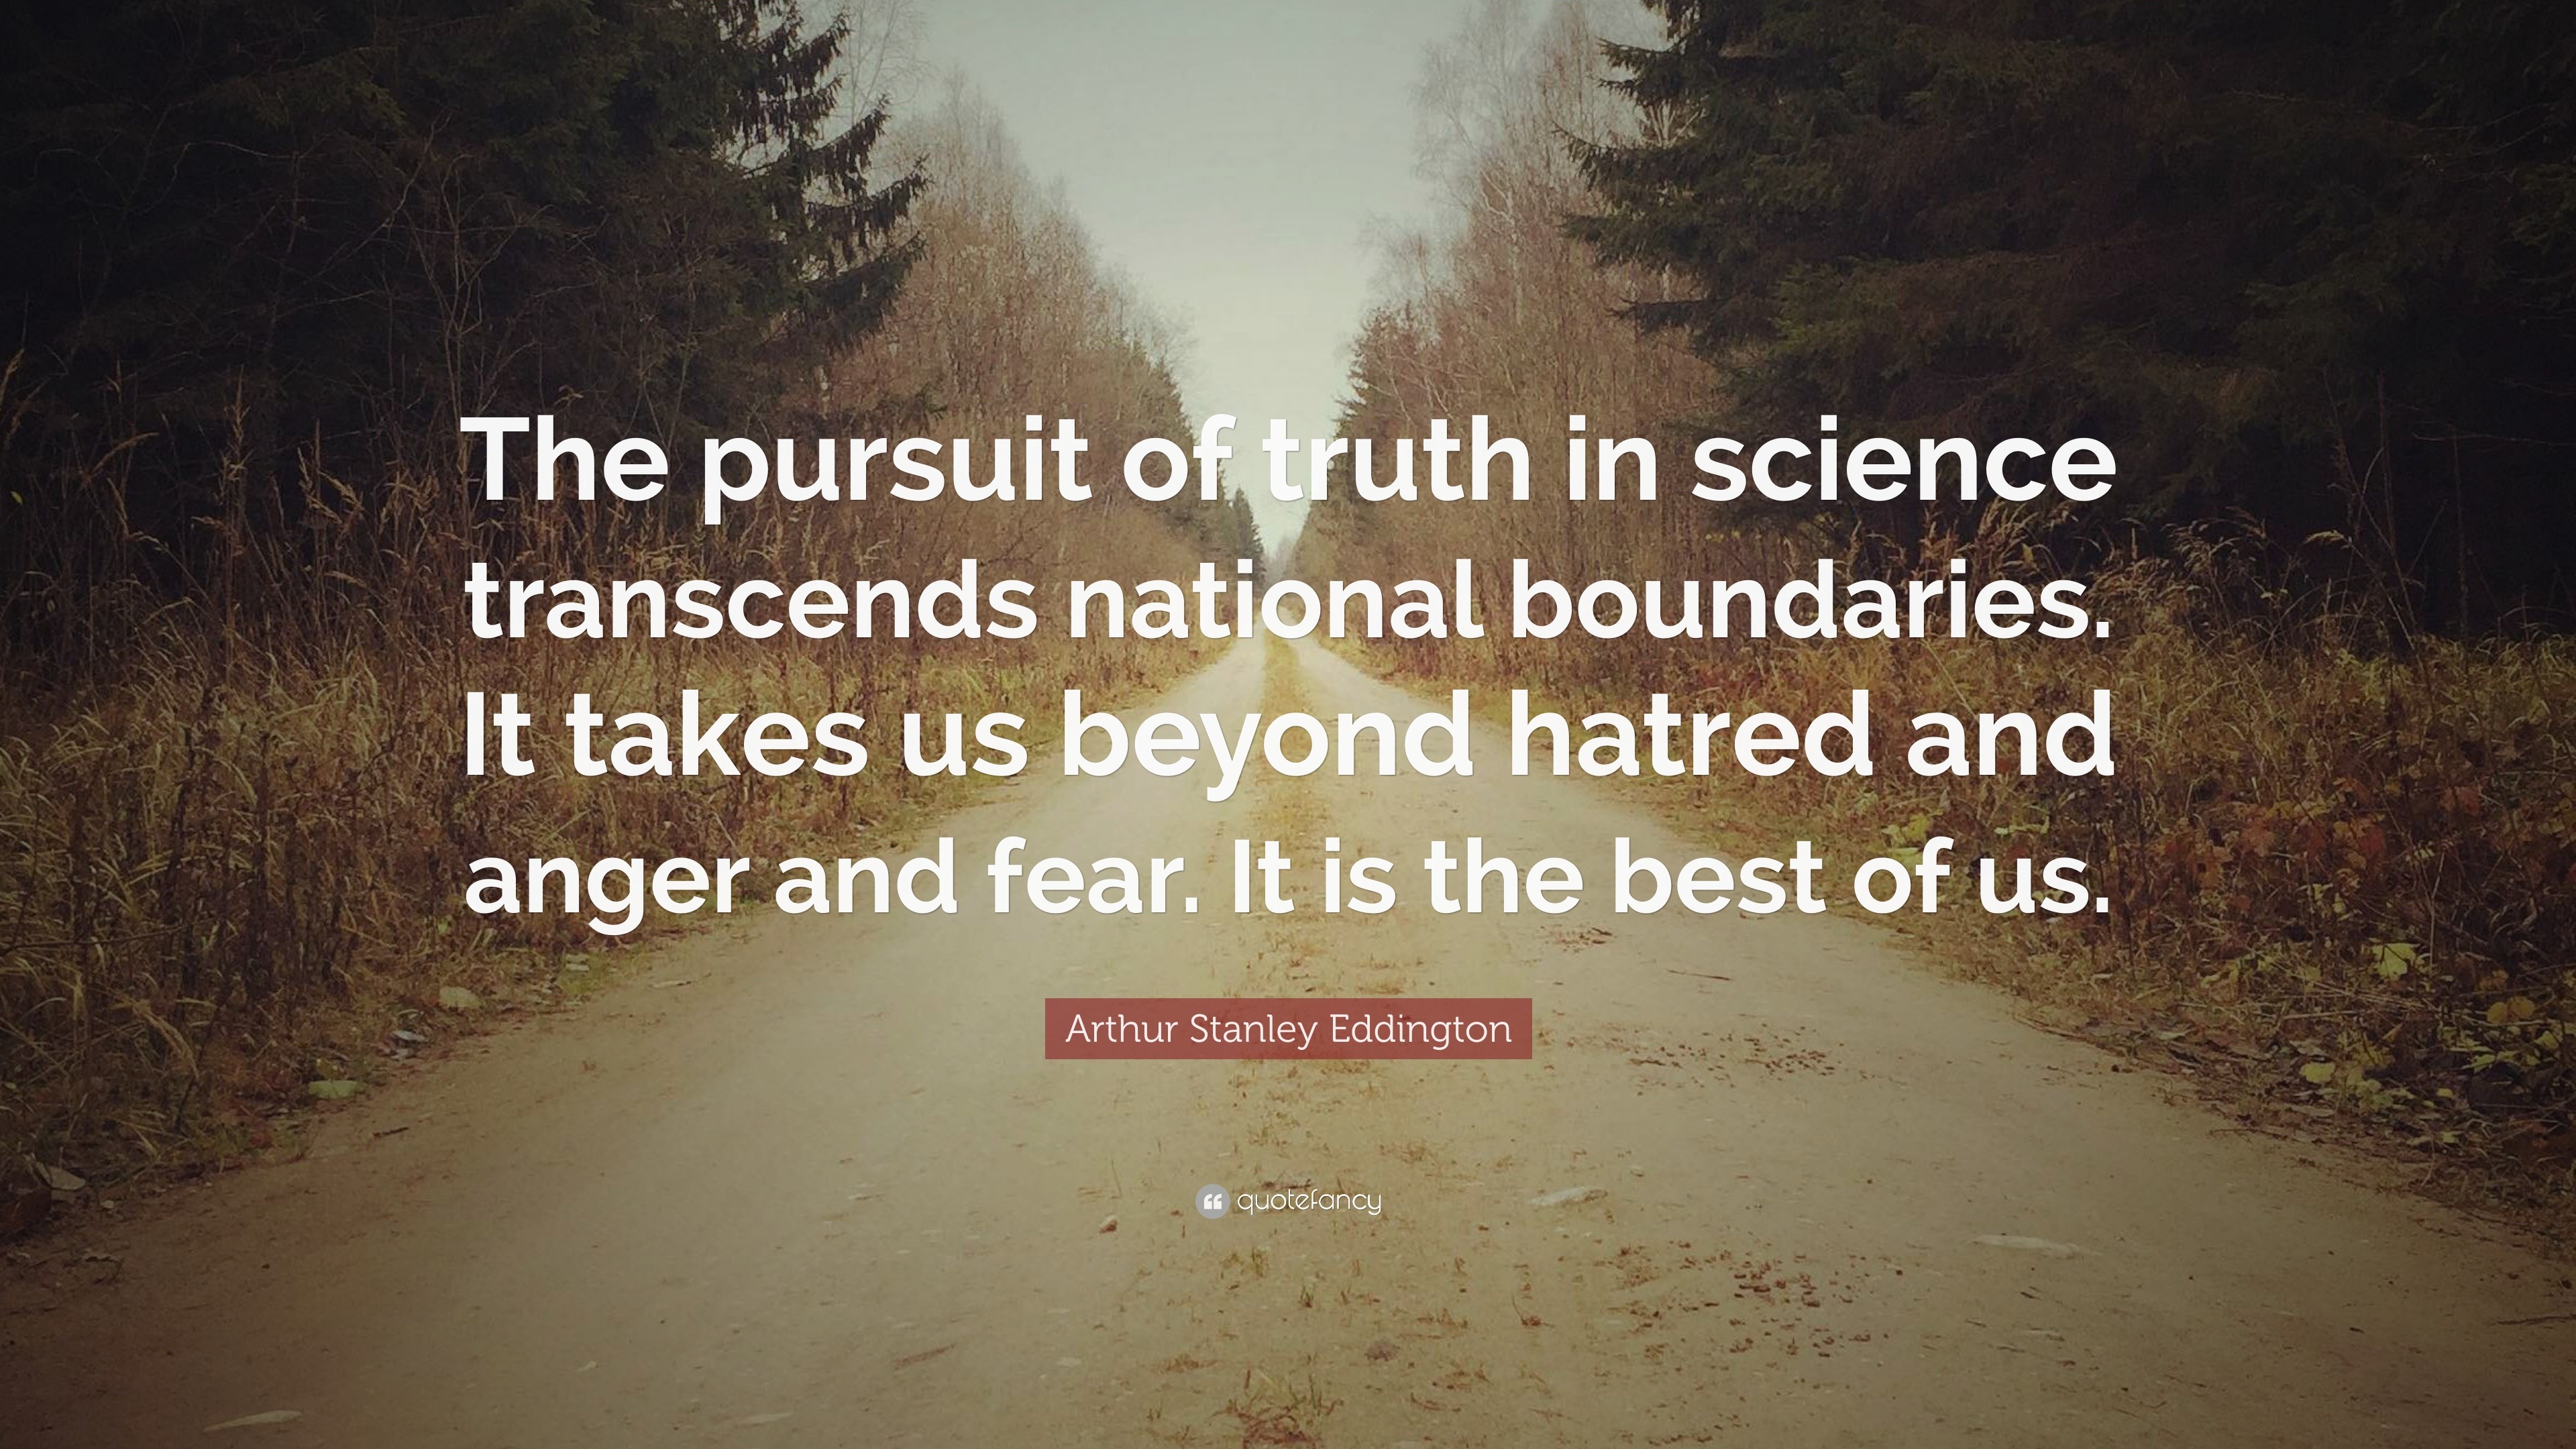 Arthur Stanley Eddington Quote “The pursuit of truth in science transcends national boundaries